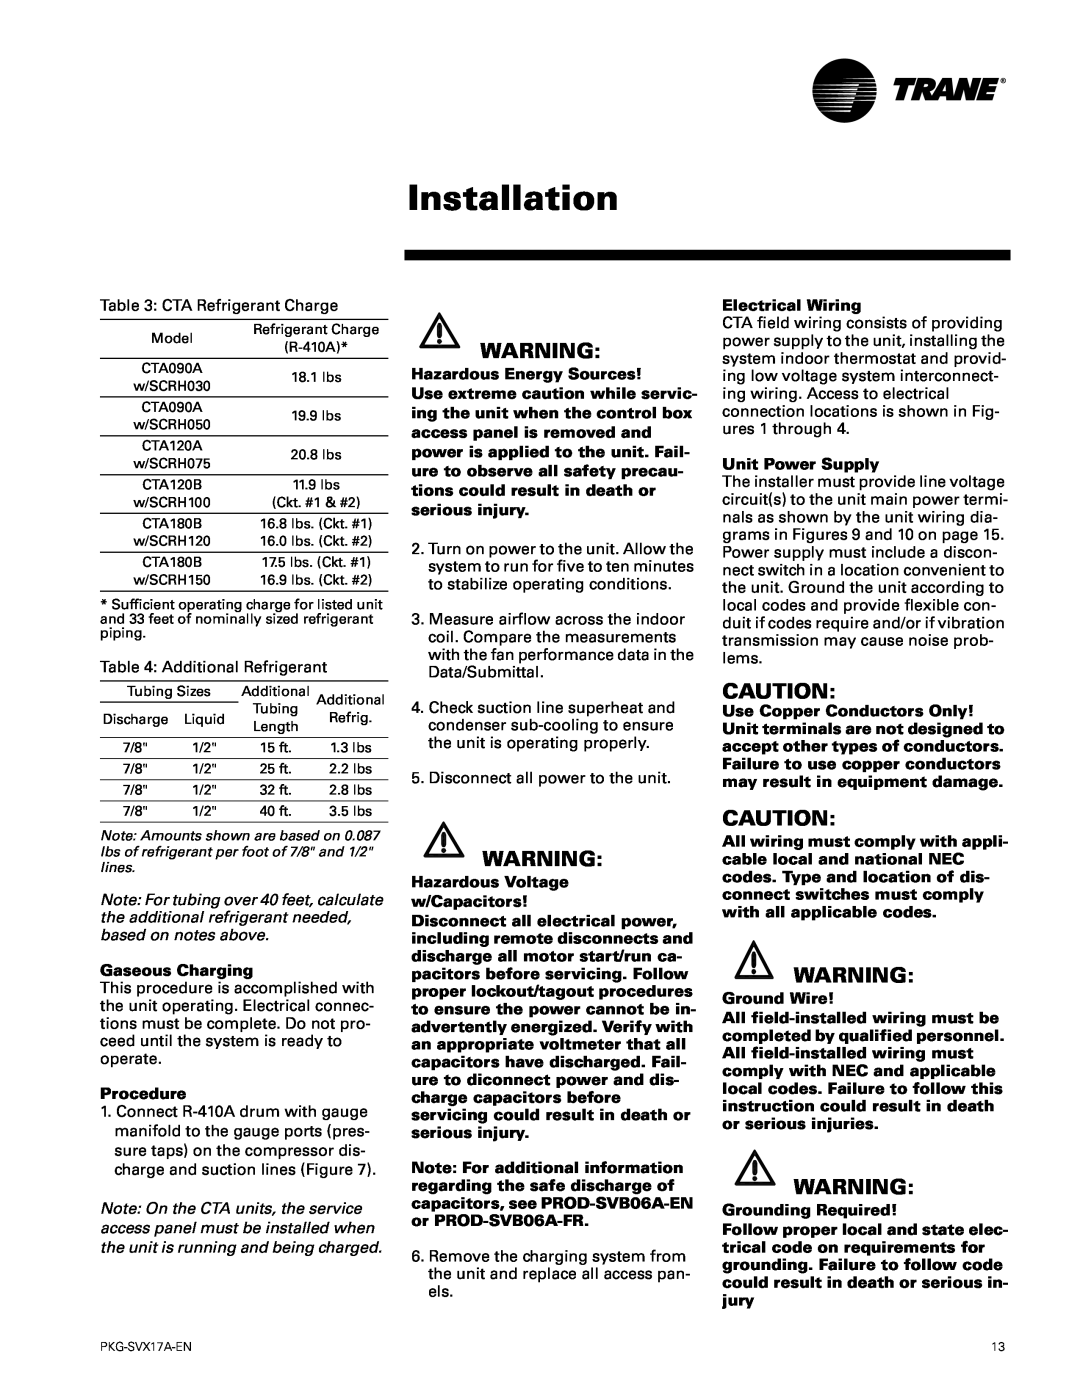 Trane PKG-SVX17A-EN manual Installation, Gaseous Charging 